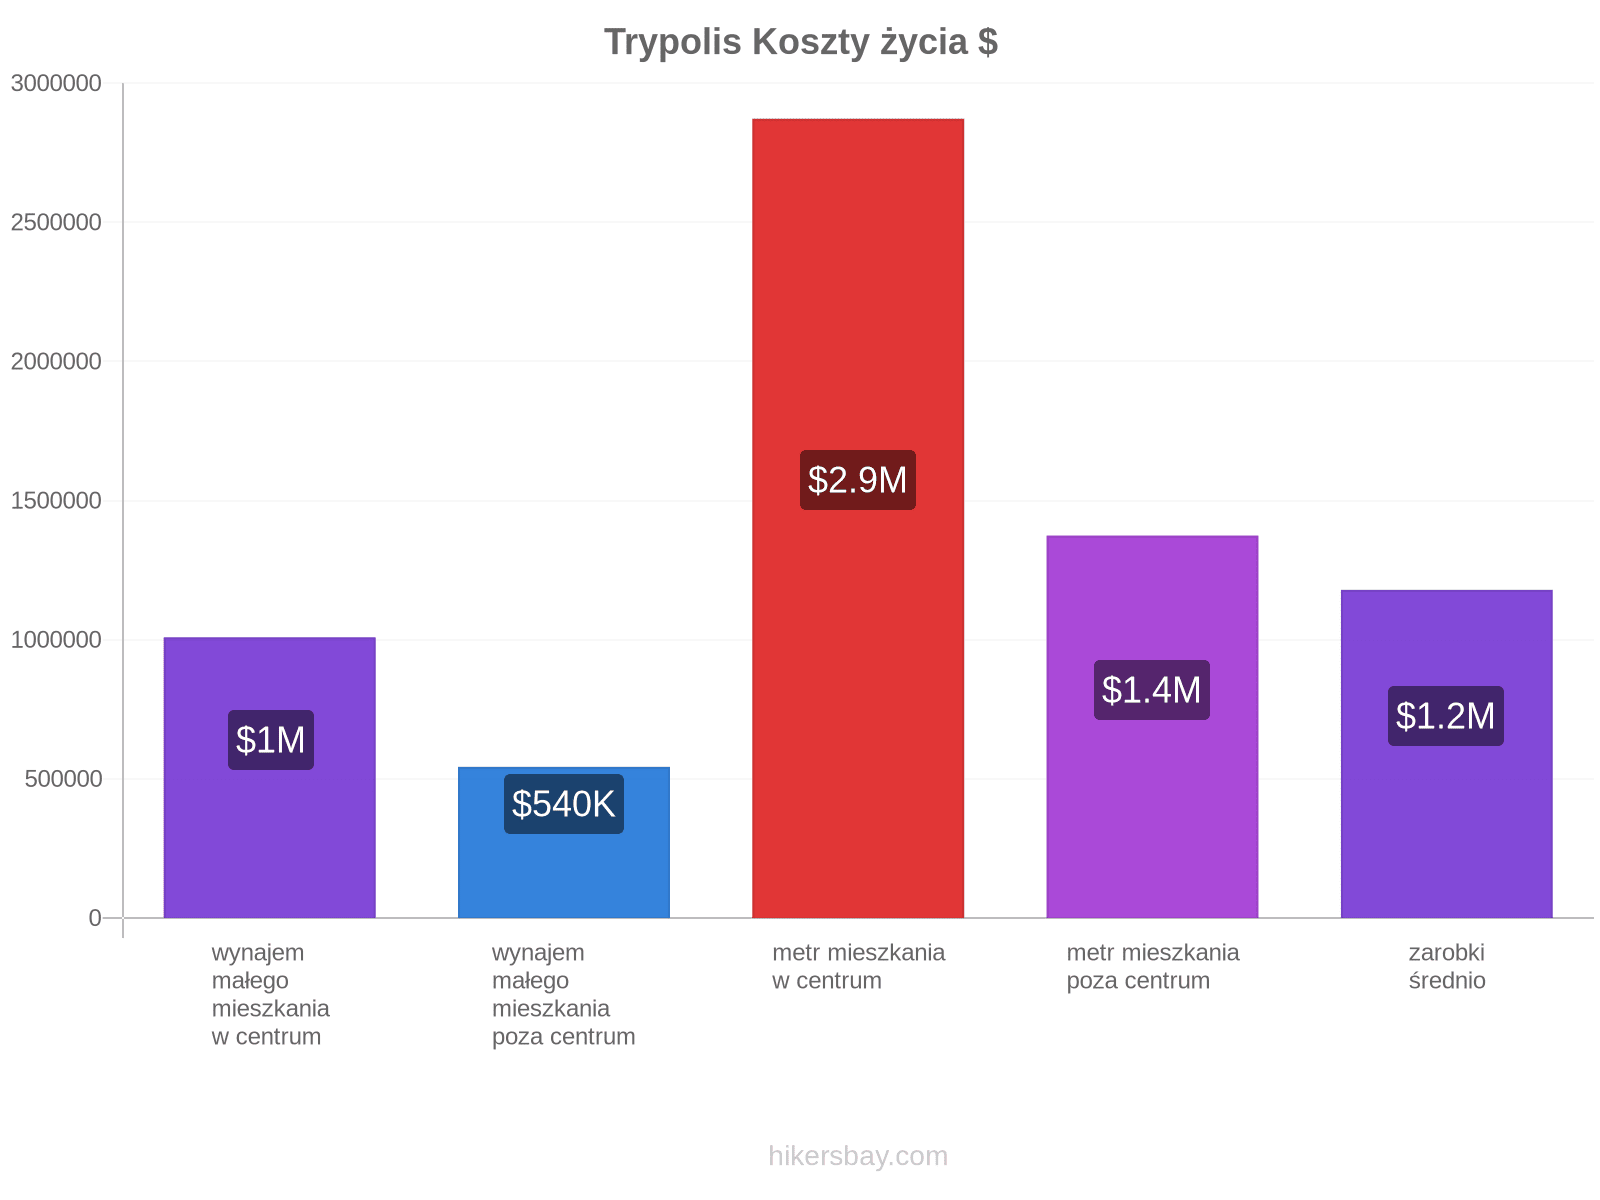 Trypolis koszty życia hikersbay.com